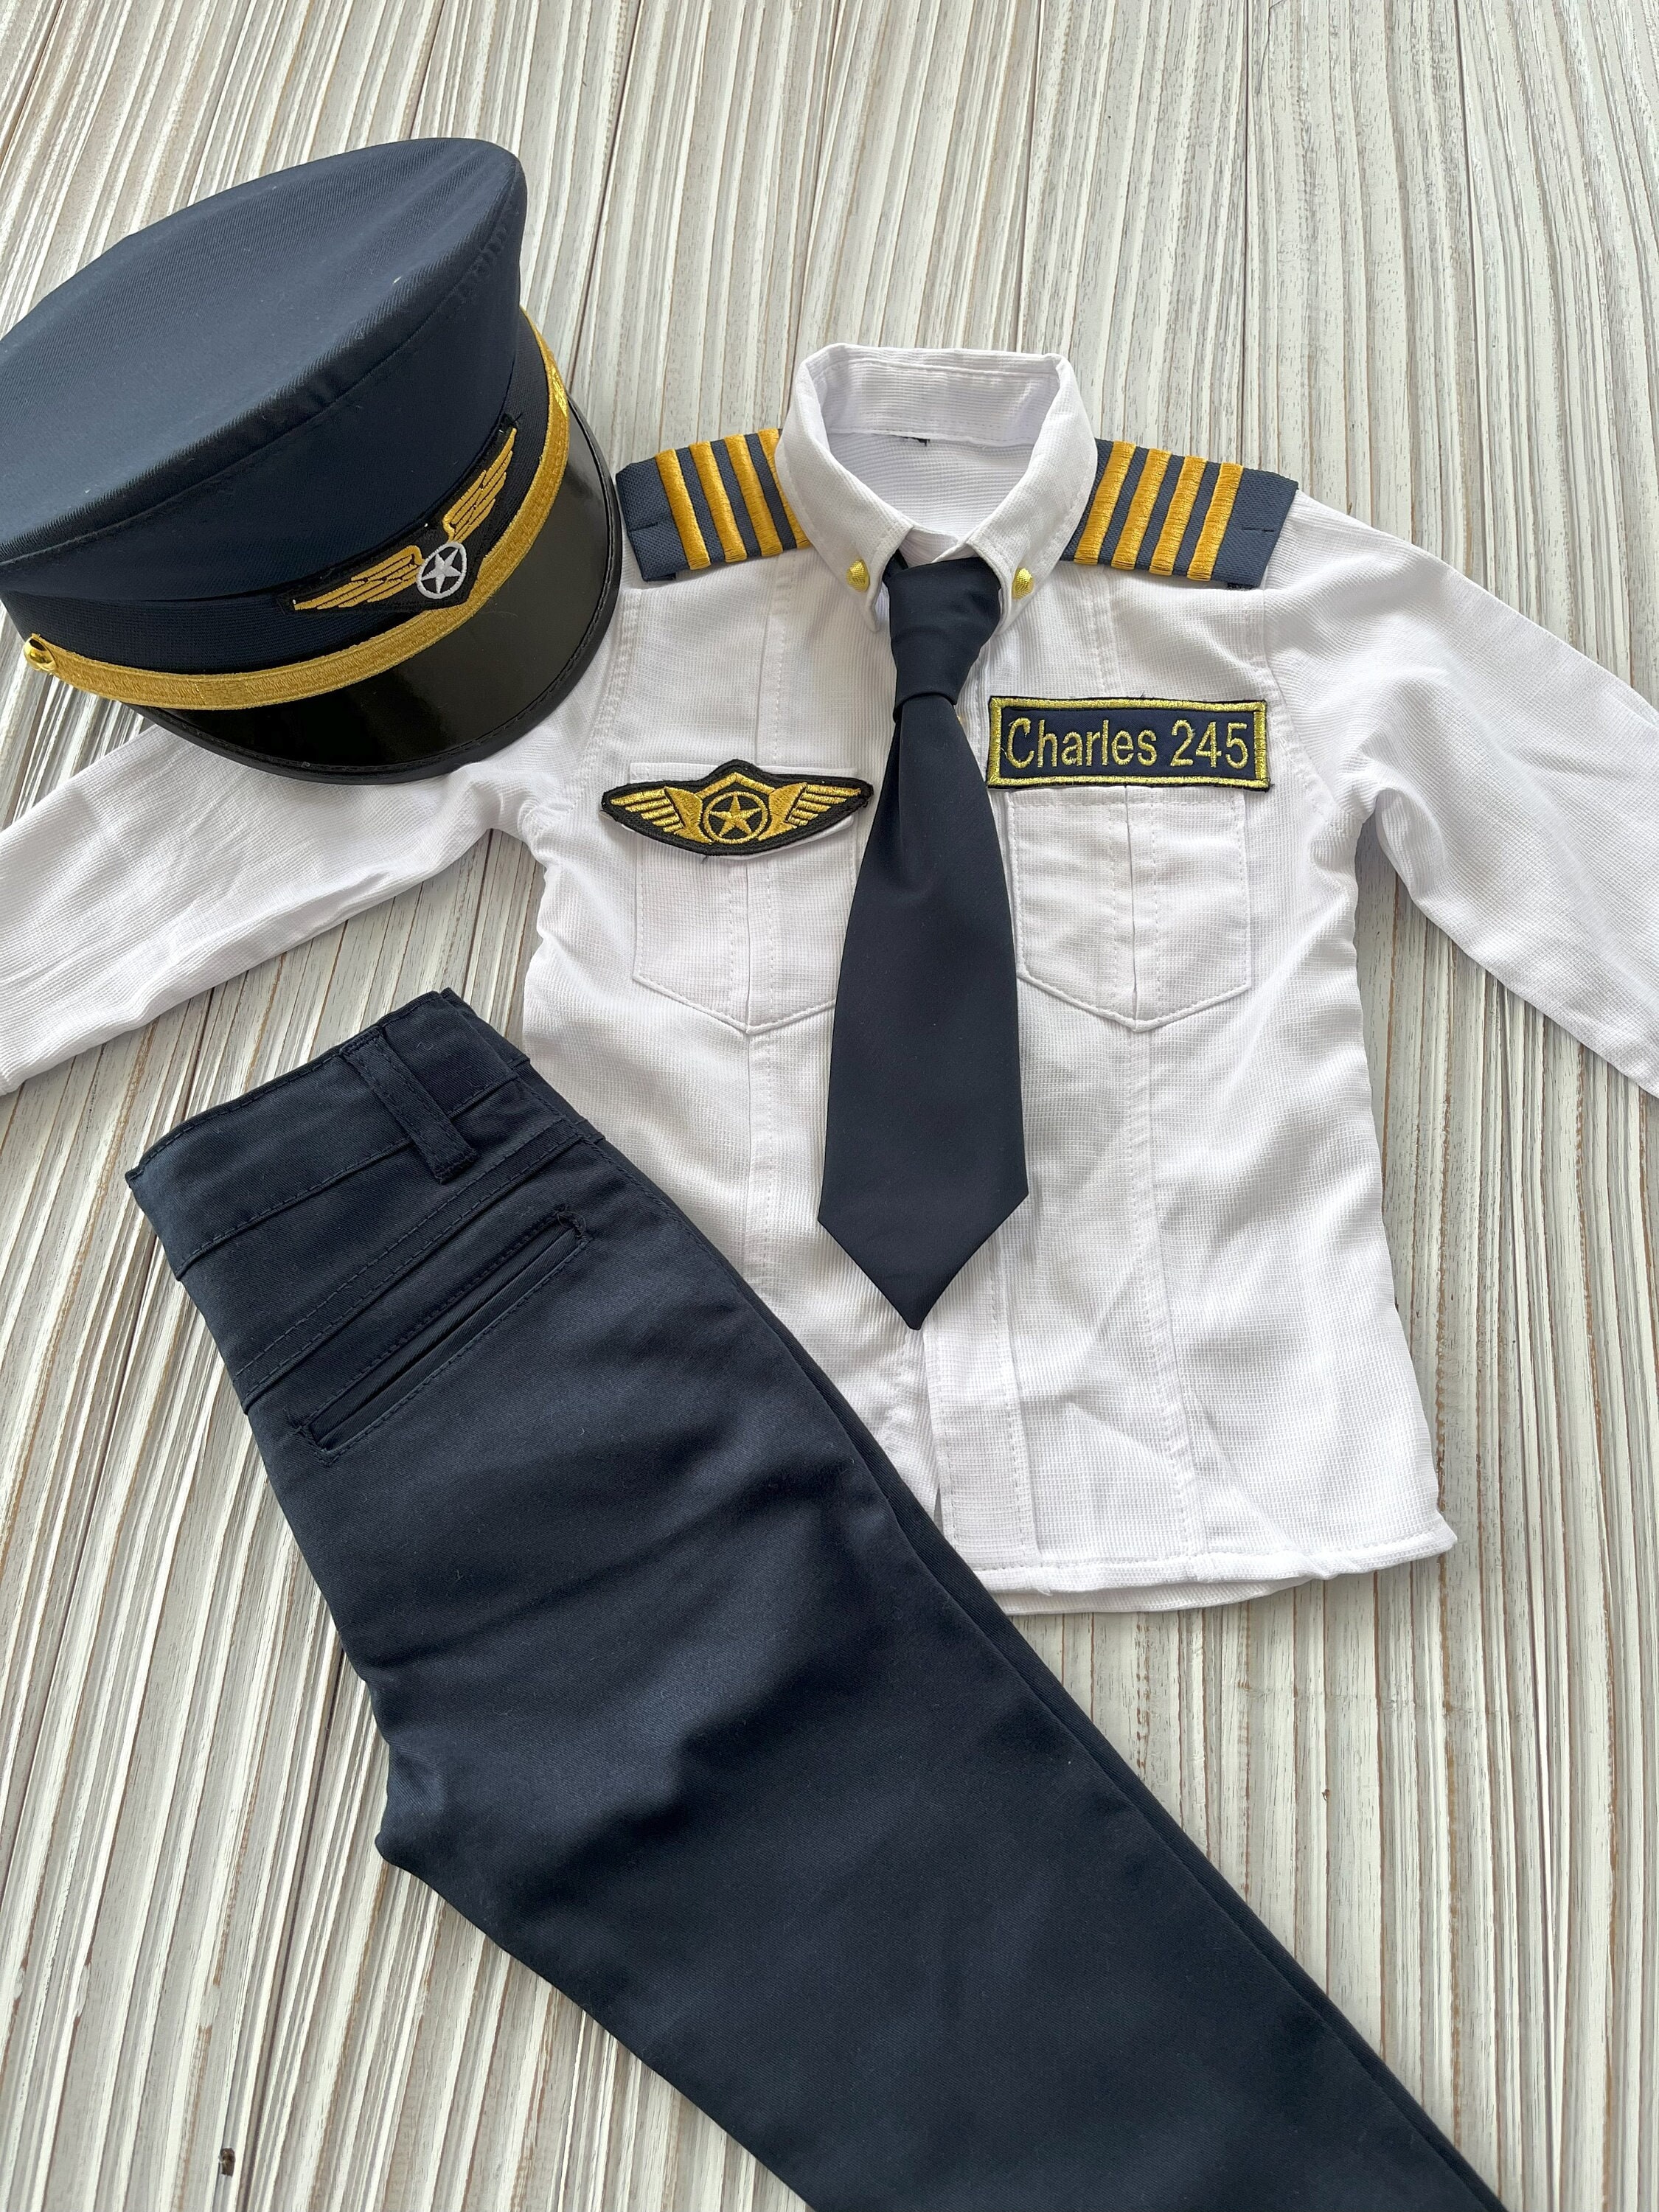 Black Airplane Zipper Pull flight Attendant, Uniform Dress, Tote Charm, Zipper  Helper, Pilot, Airline Dress, With Airplane, Airplane Charm 